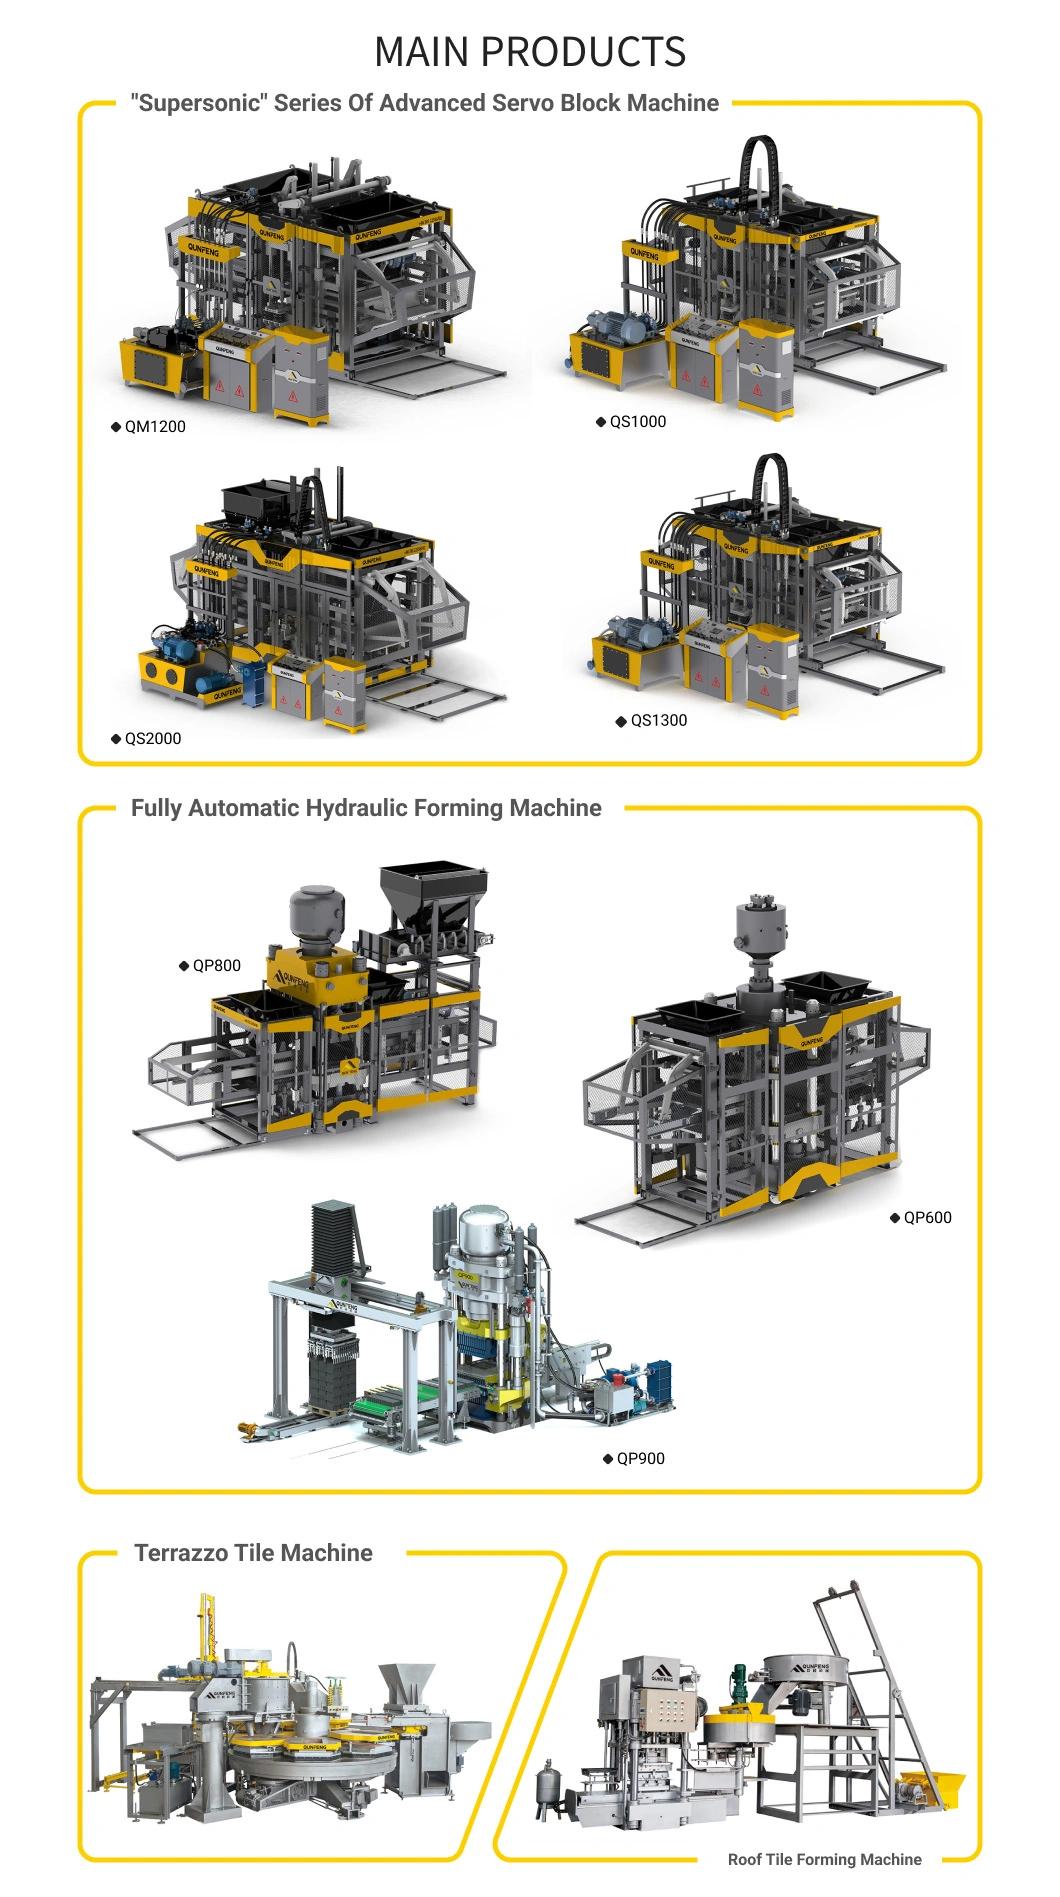 PLC, Pressure Vessel, Motor Hollow Machine, Automatic Block Making Machine